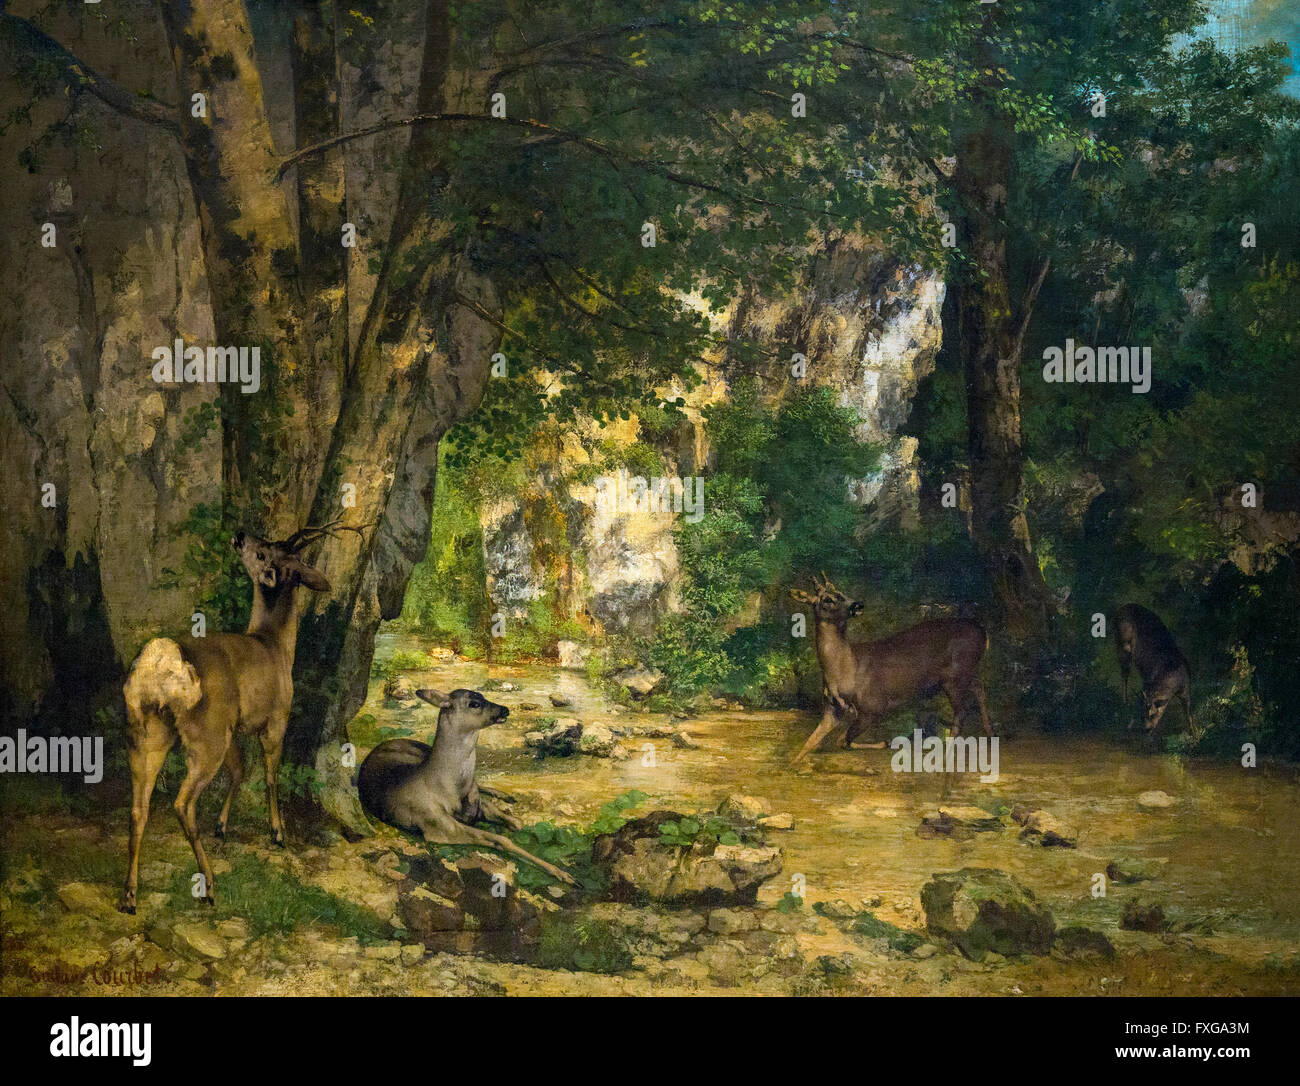 Retorno de los Ciervos hasta el arroyo de Plaisir Fontaine, La Remise des Chevreuils au ruisseau de Plaisir-Fontaine, Gustave Courbet Foto de stock